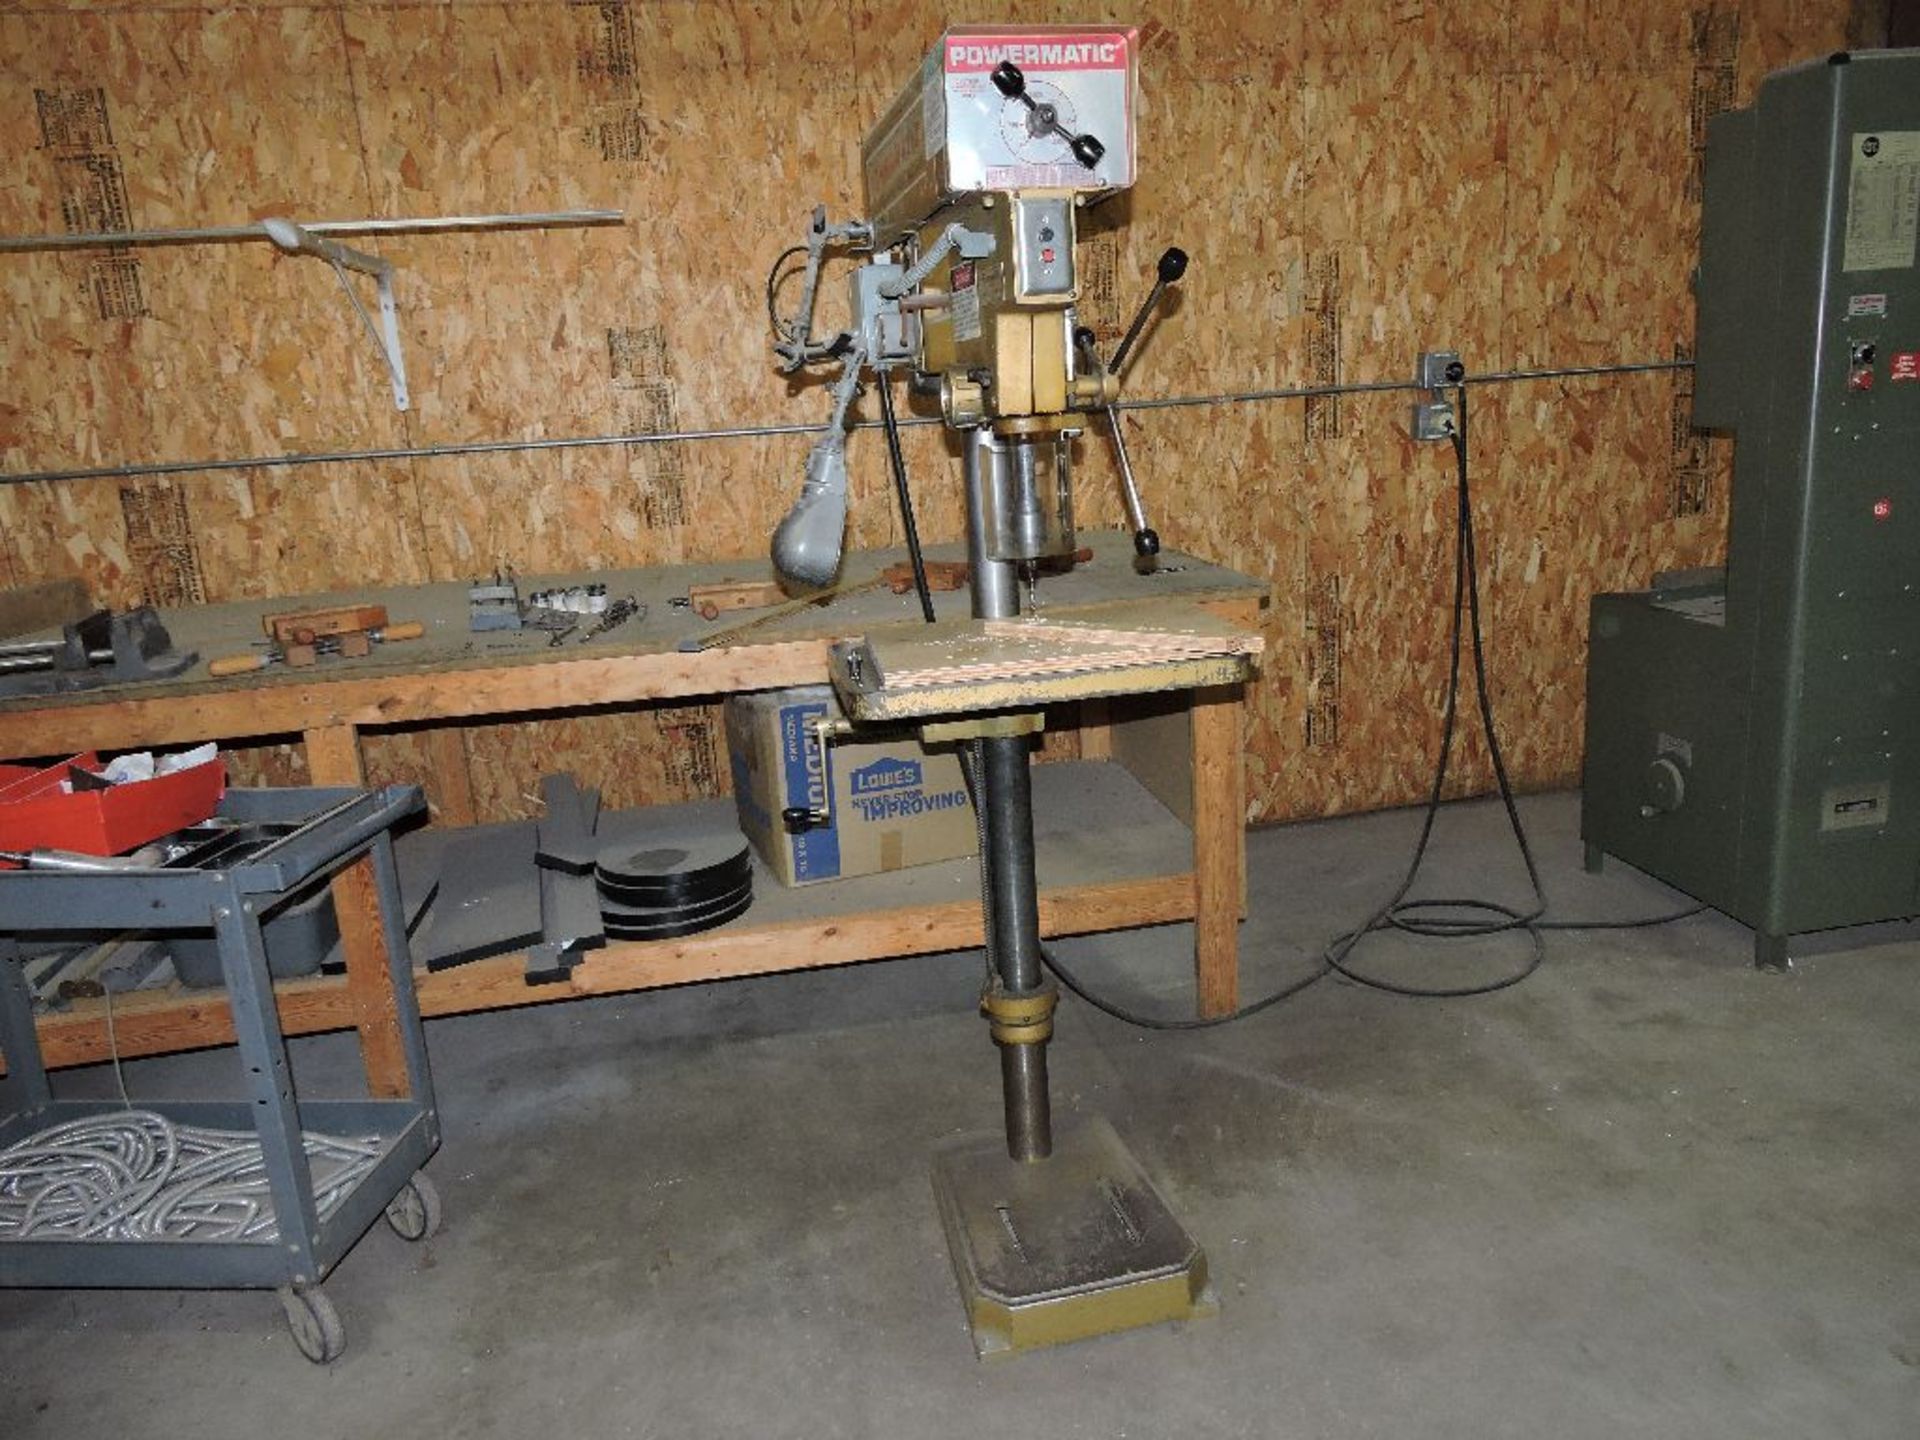 Powermatic drill press, model 1150A, sn 9415V173.